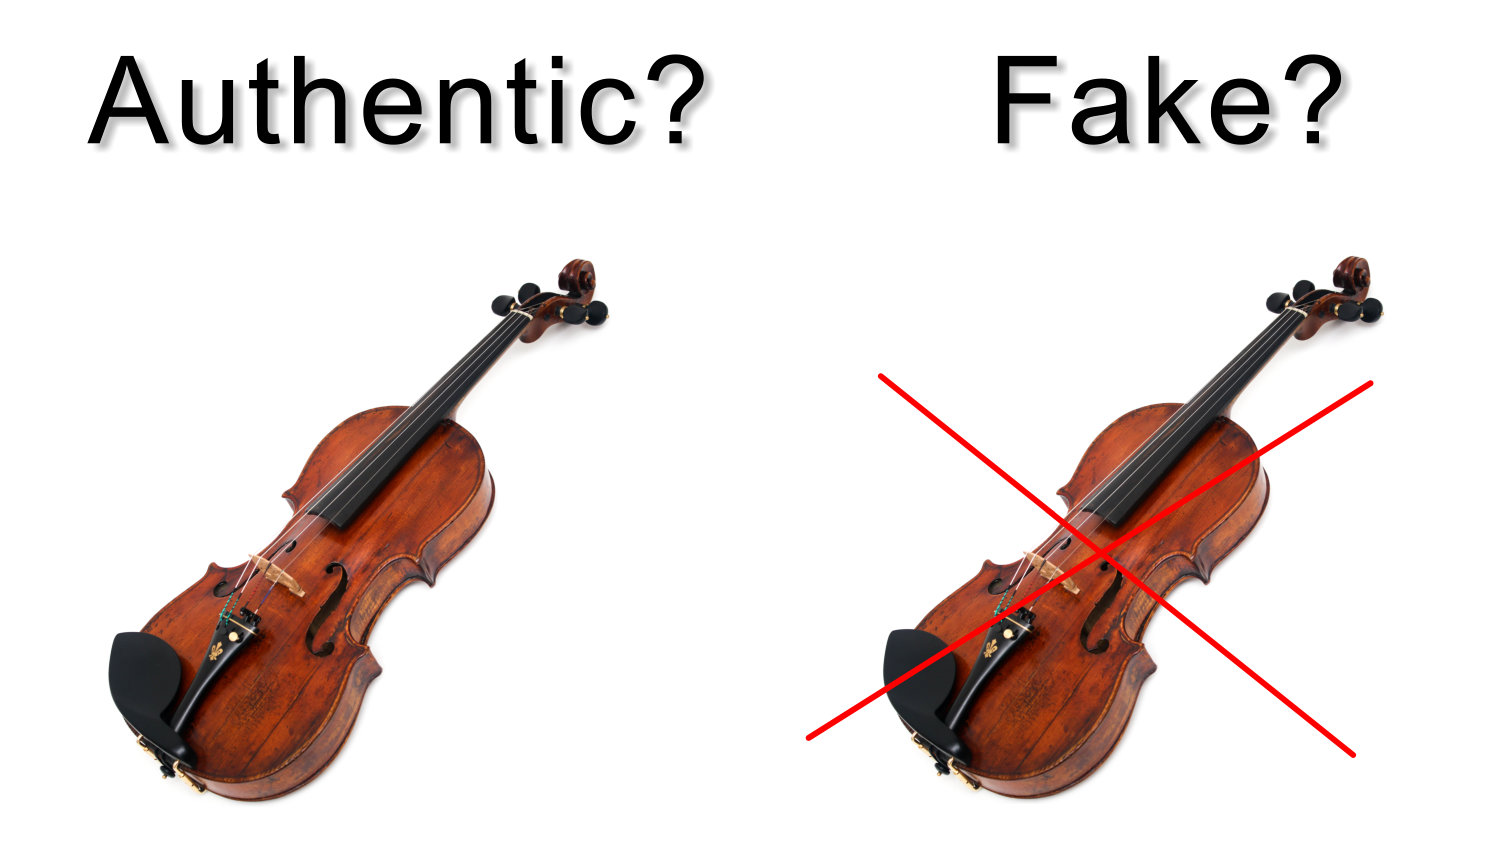 Authentic or fake violin